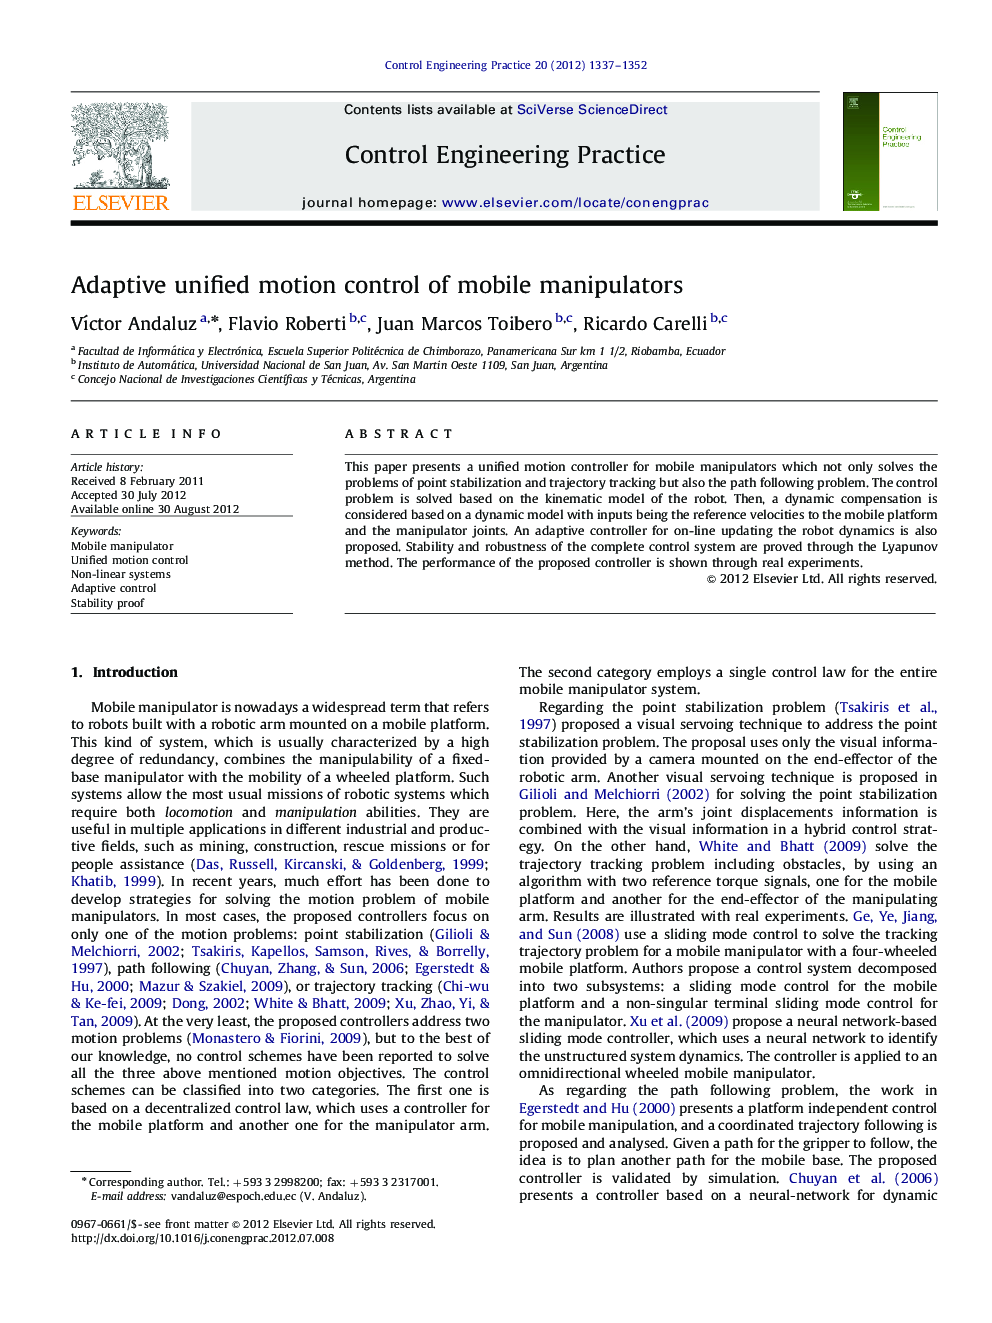 Adaptive unified motion control of mobile manipulators